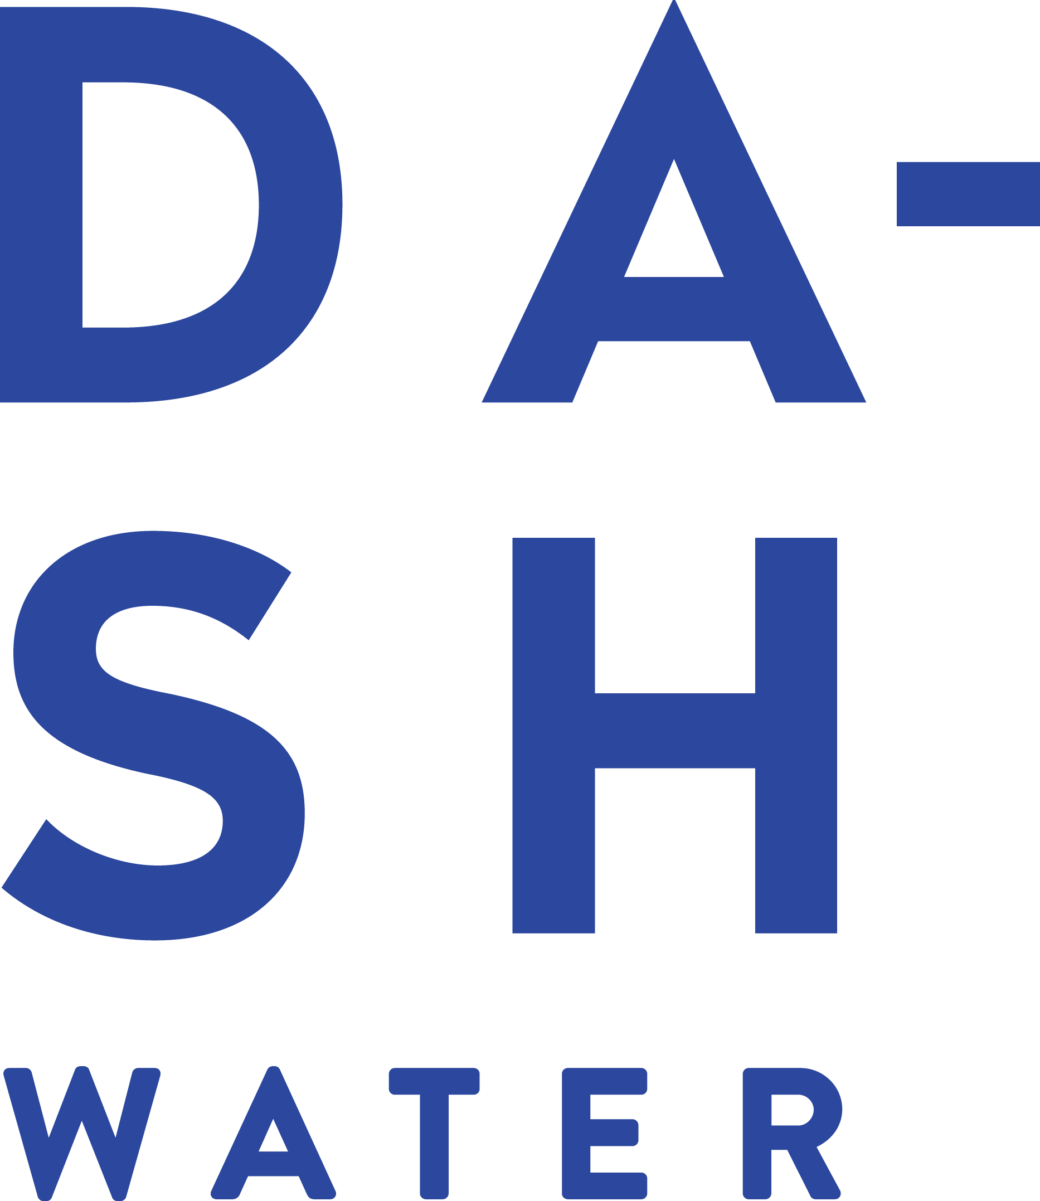 Dash Water Raises Series A Round to Fund Growth - Arlington Capital Advisors